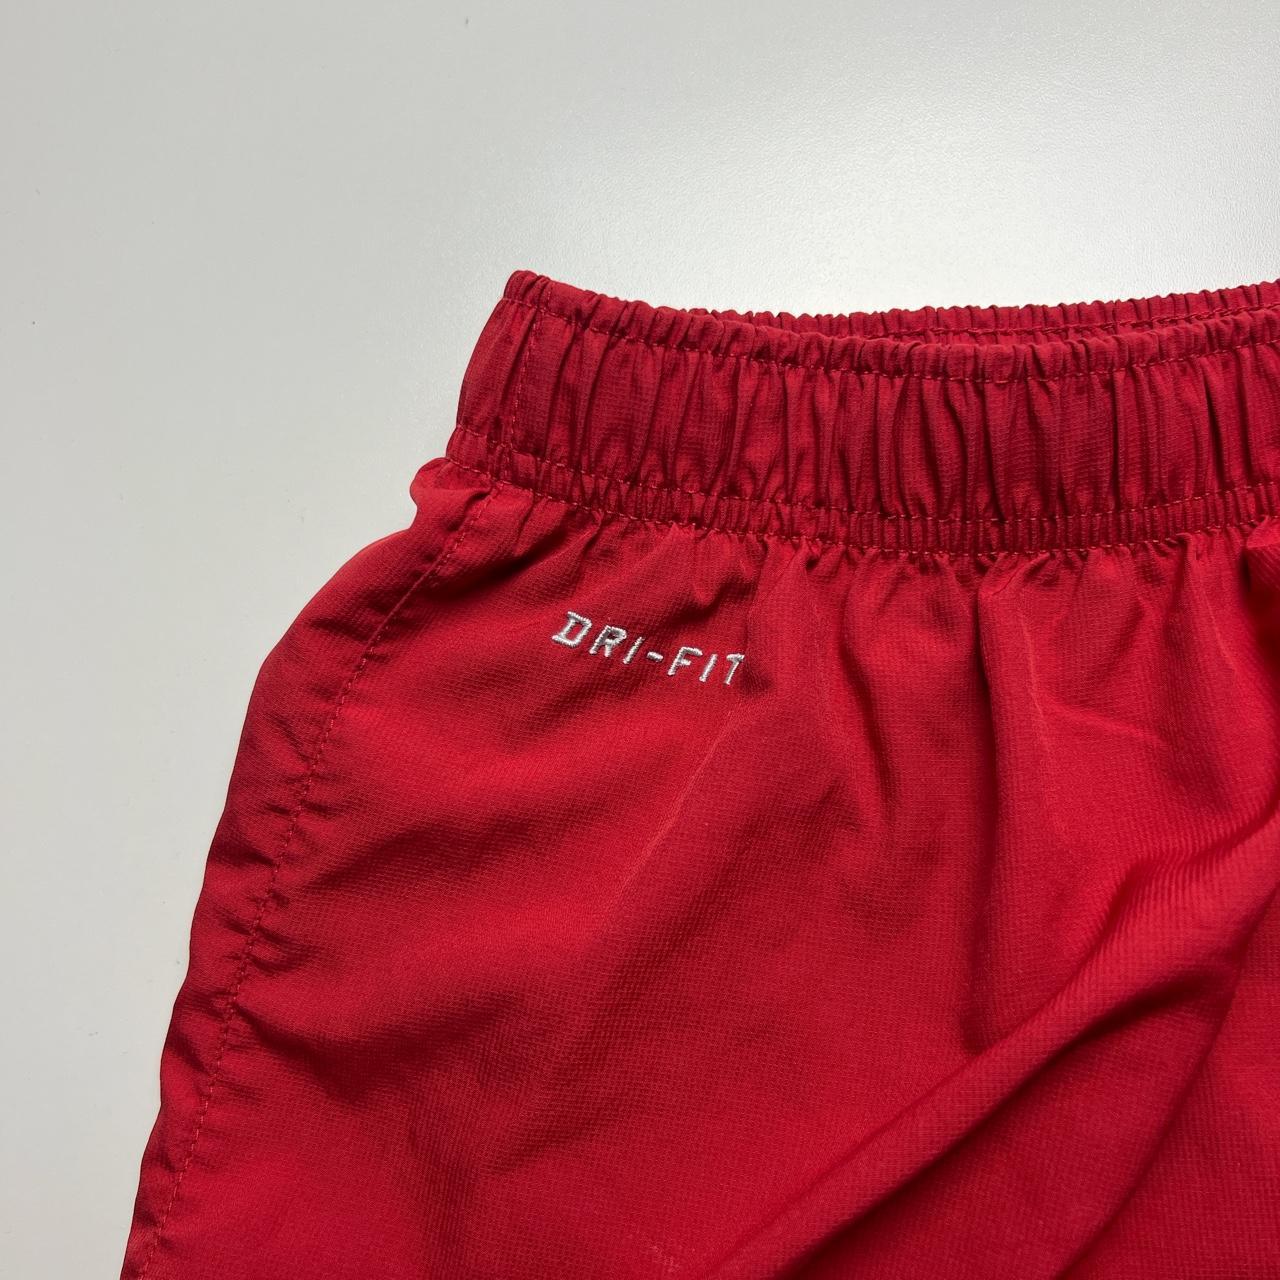 Nike Men's Burgundy and Red Shorts | Depop